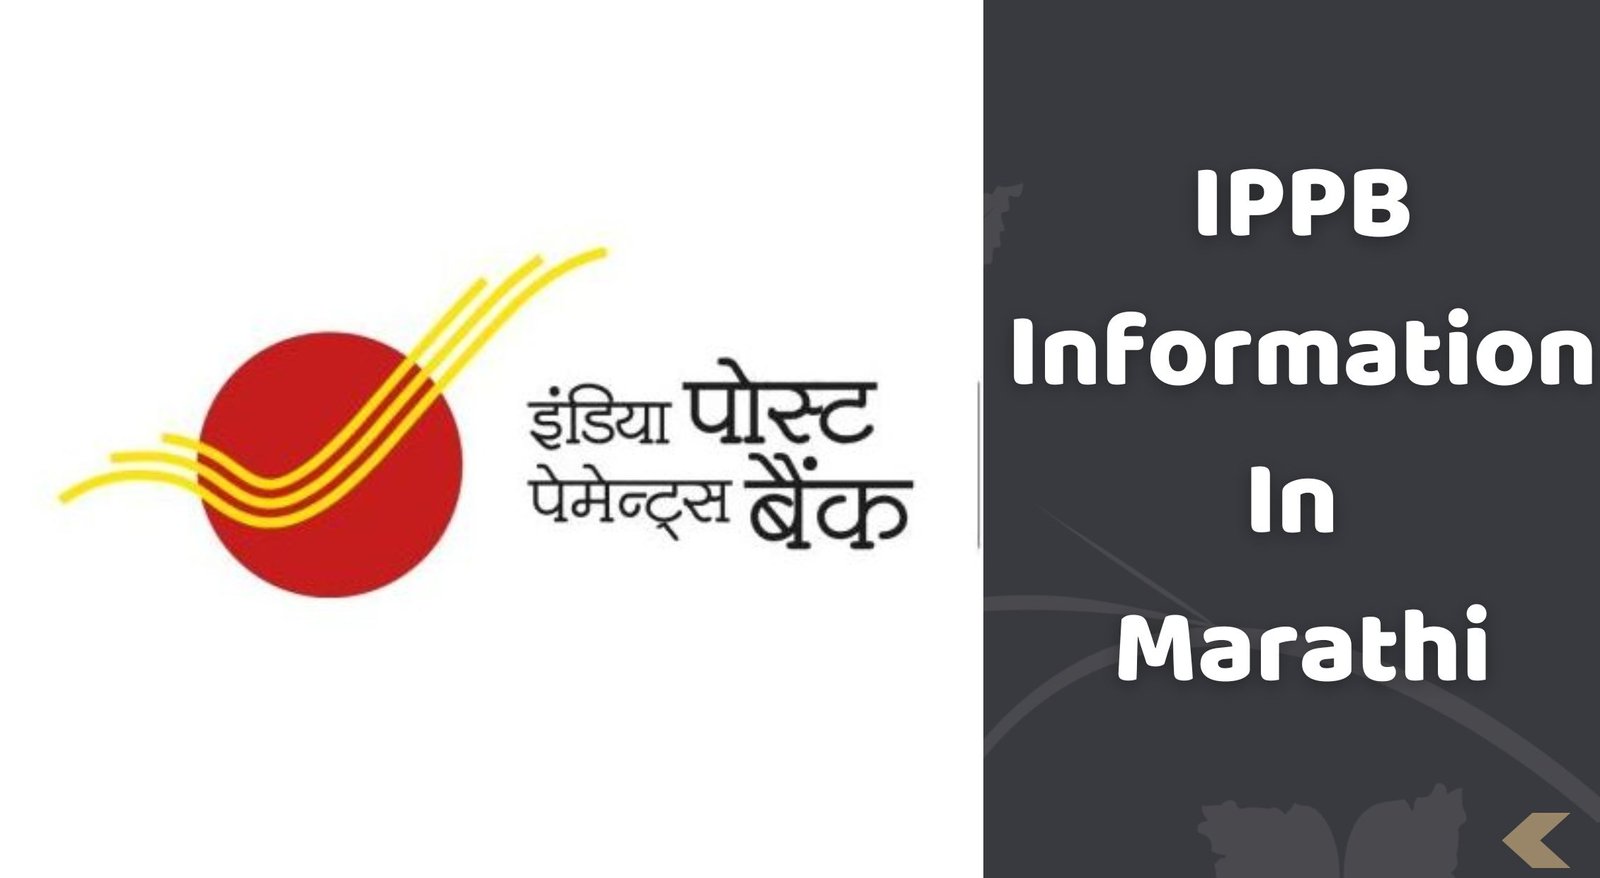 IPPB म्हणजे काय । IPPB खाते कसे उघडावे । IPPB Information In Marathi